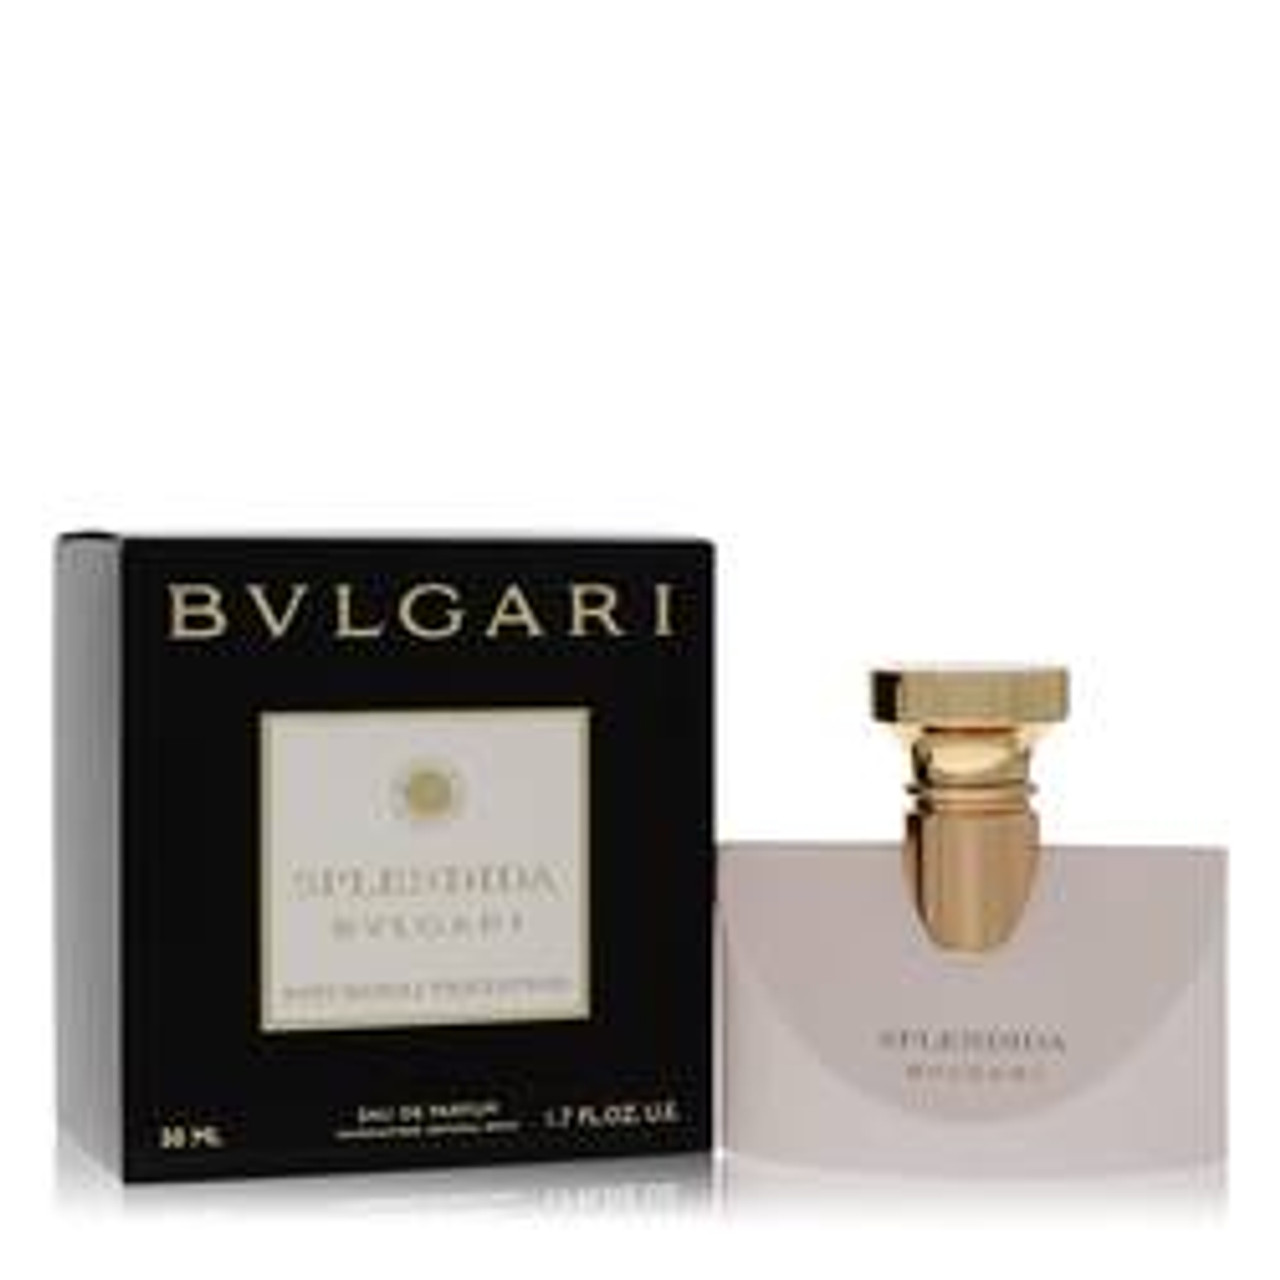 Bvlgari Splendida Patchouli Tentation Perfume By Bvlgari Eau De Parfum Spray 1.7 oz for Women - *Pre-Order